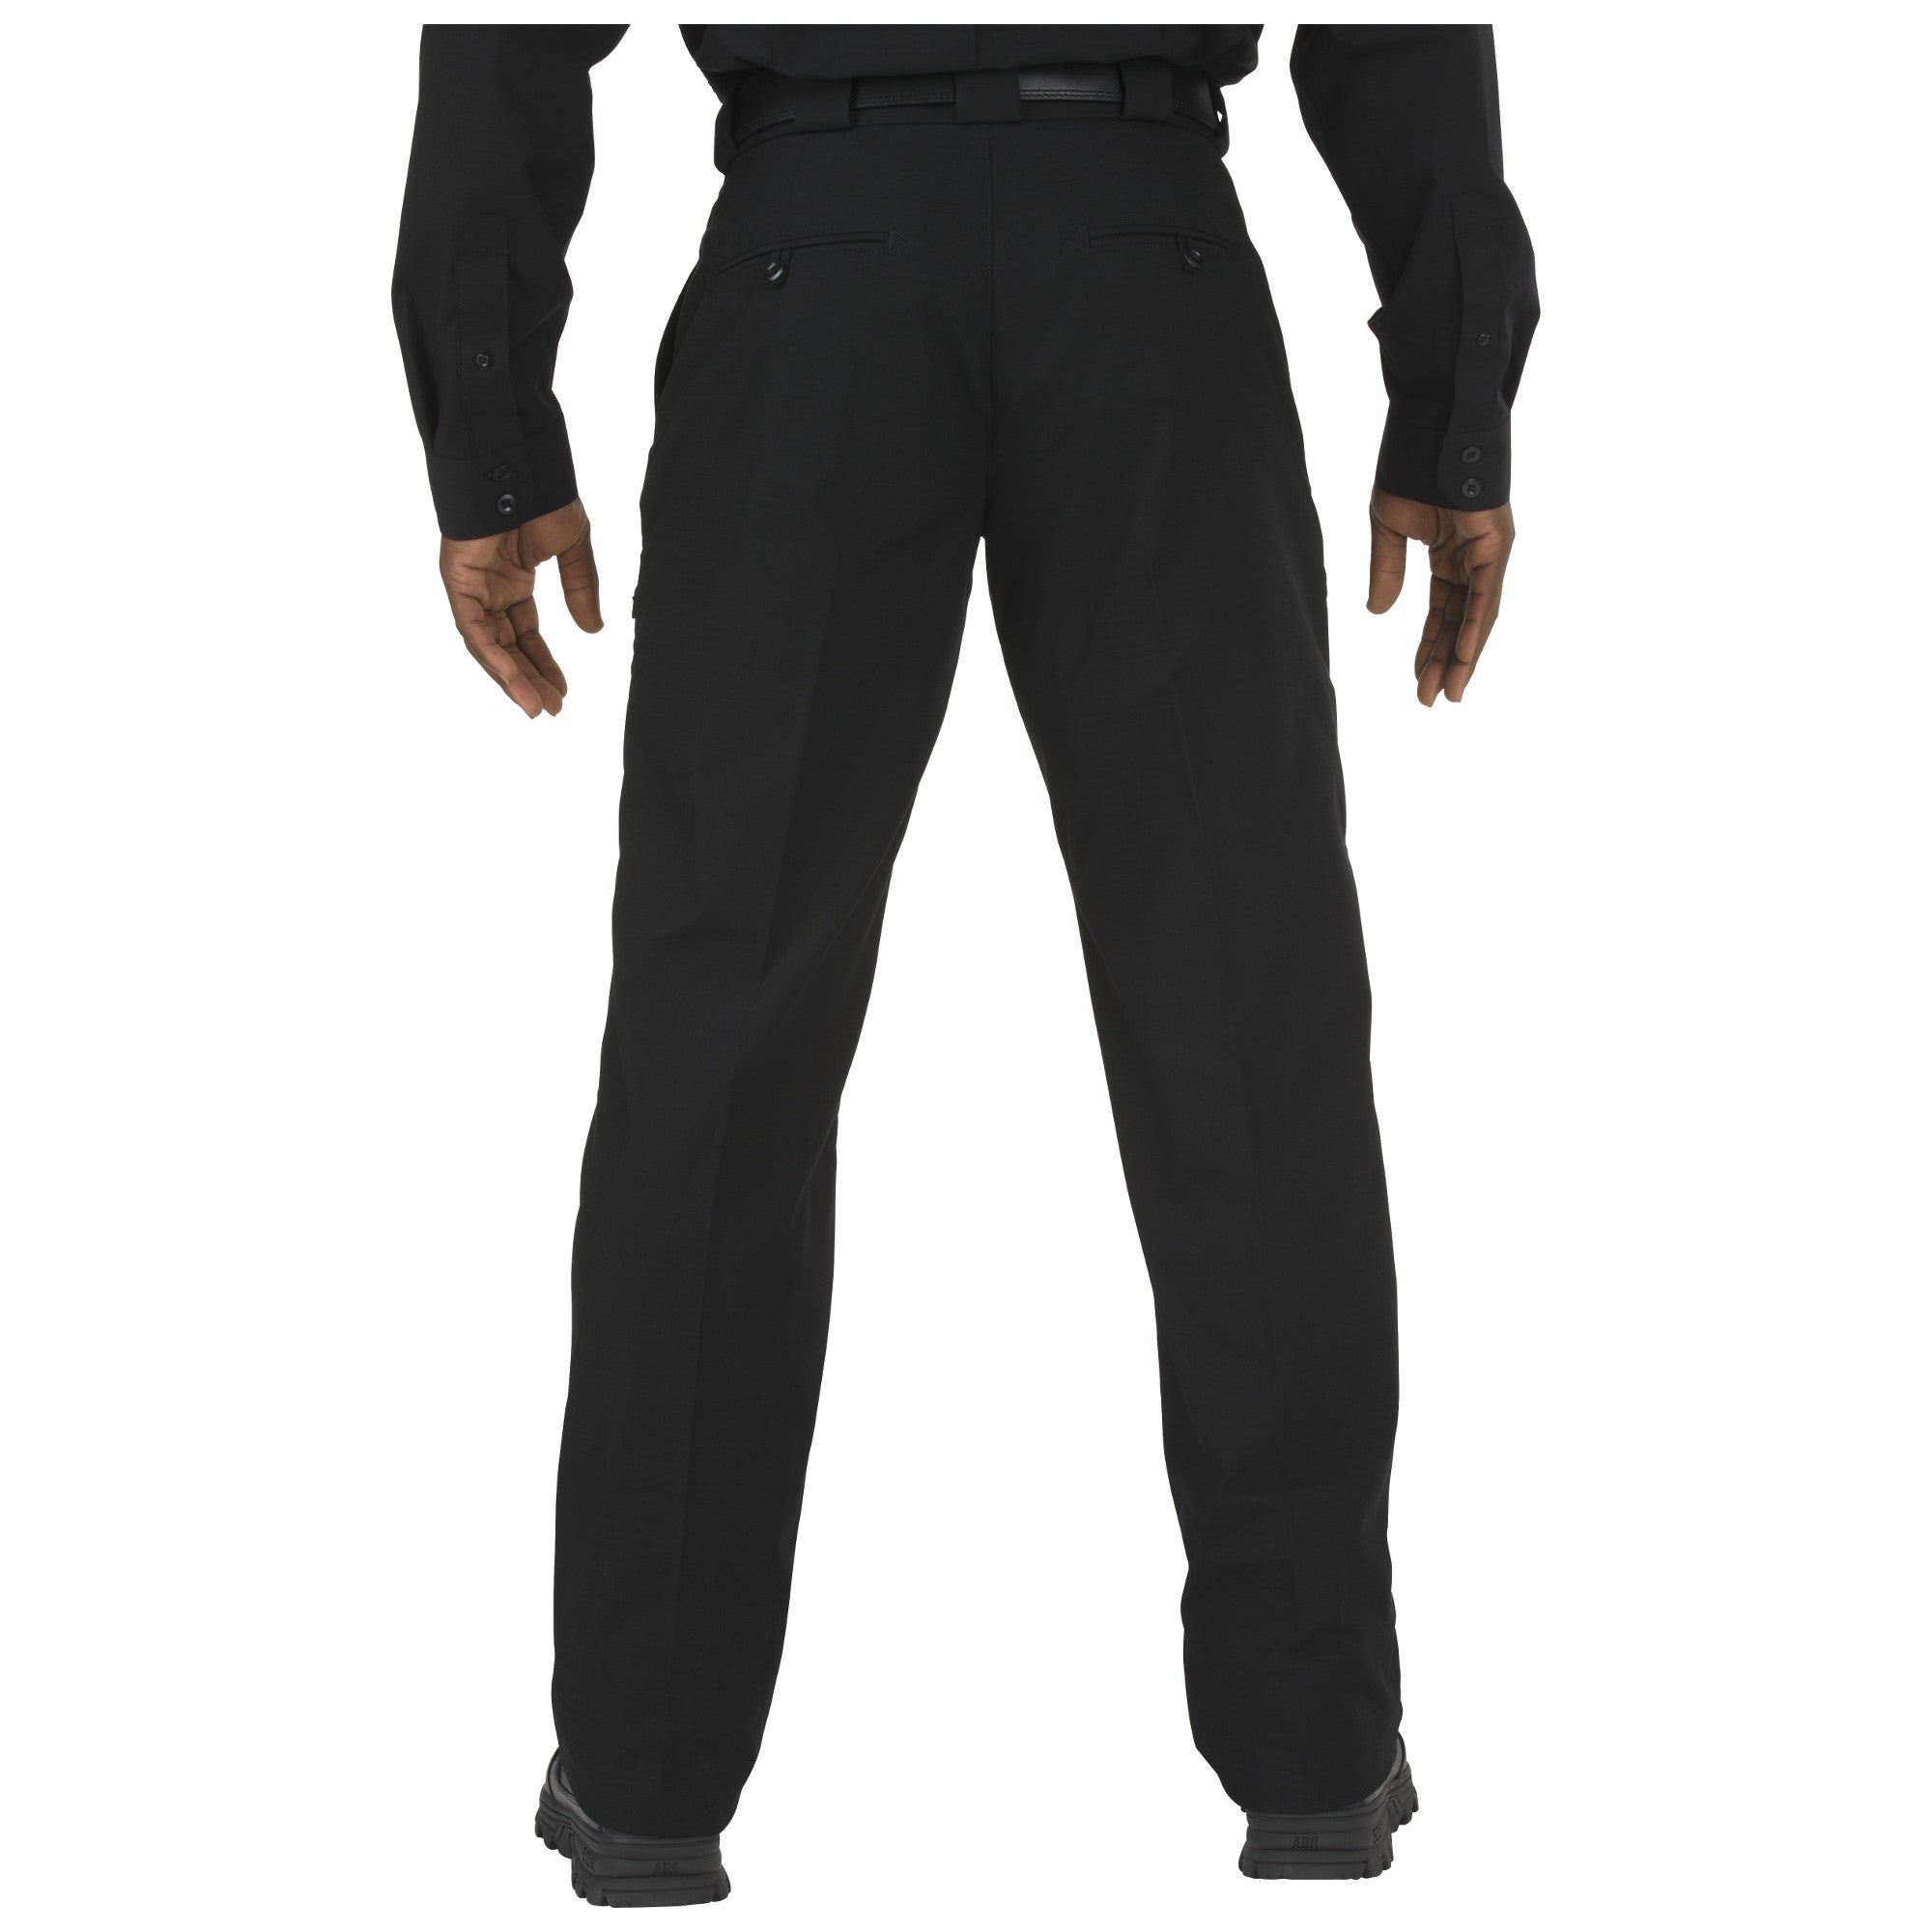 5.11 Tactical Men's Stryke PDU Class A Pants Black Tactical Gear Australia Supplier Distributor Dealer